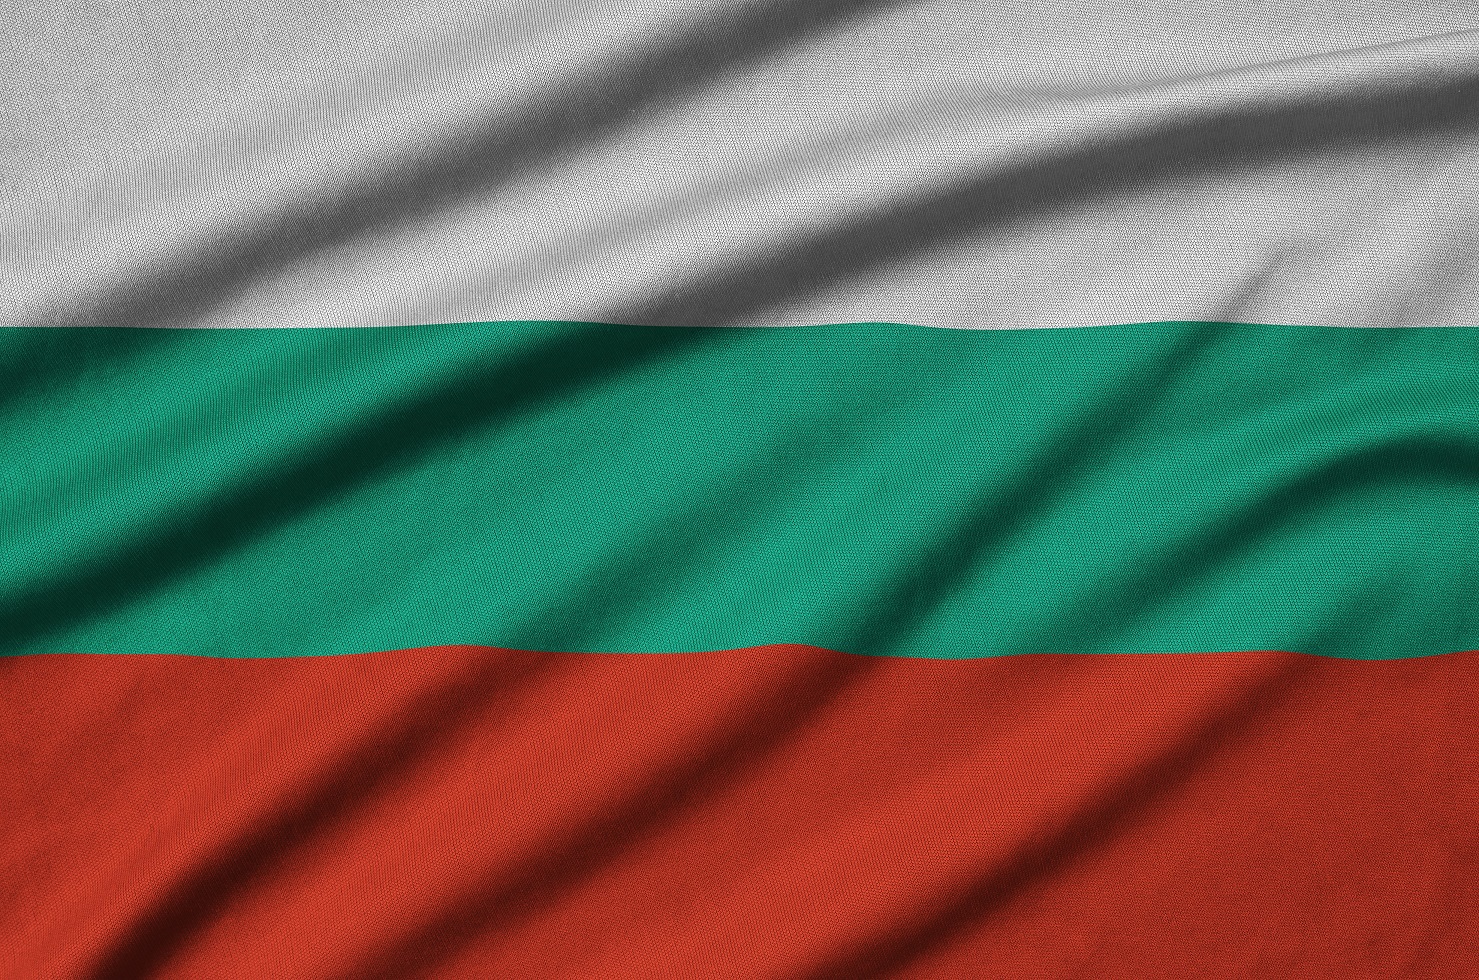 bulgaria flag is depicted on a sports cloth fabric DZ57B8N Болгария Болгария